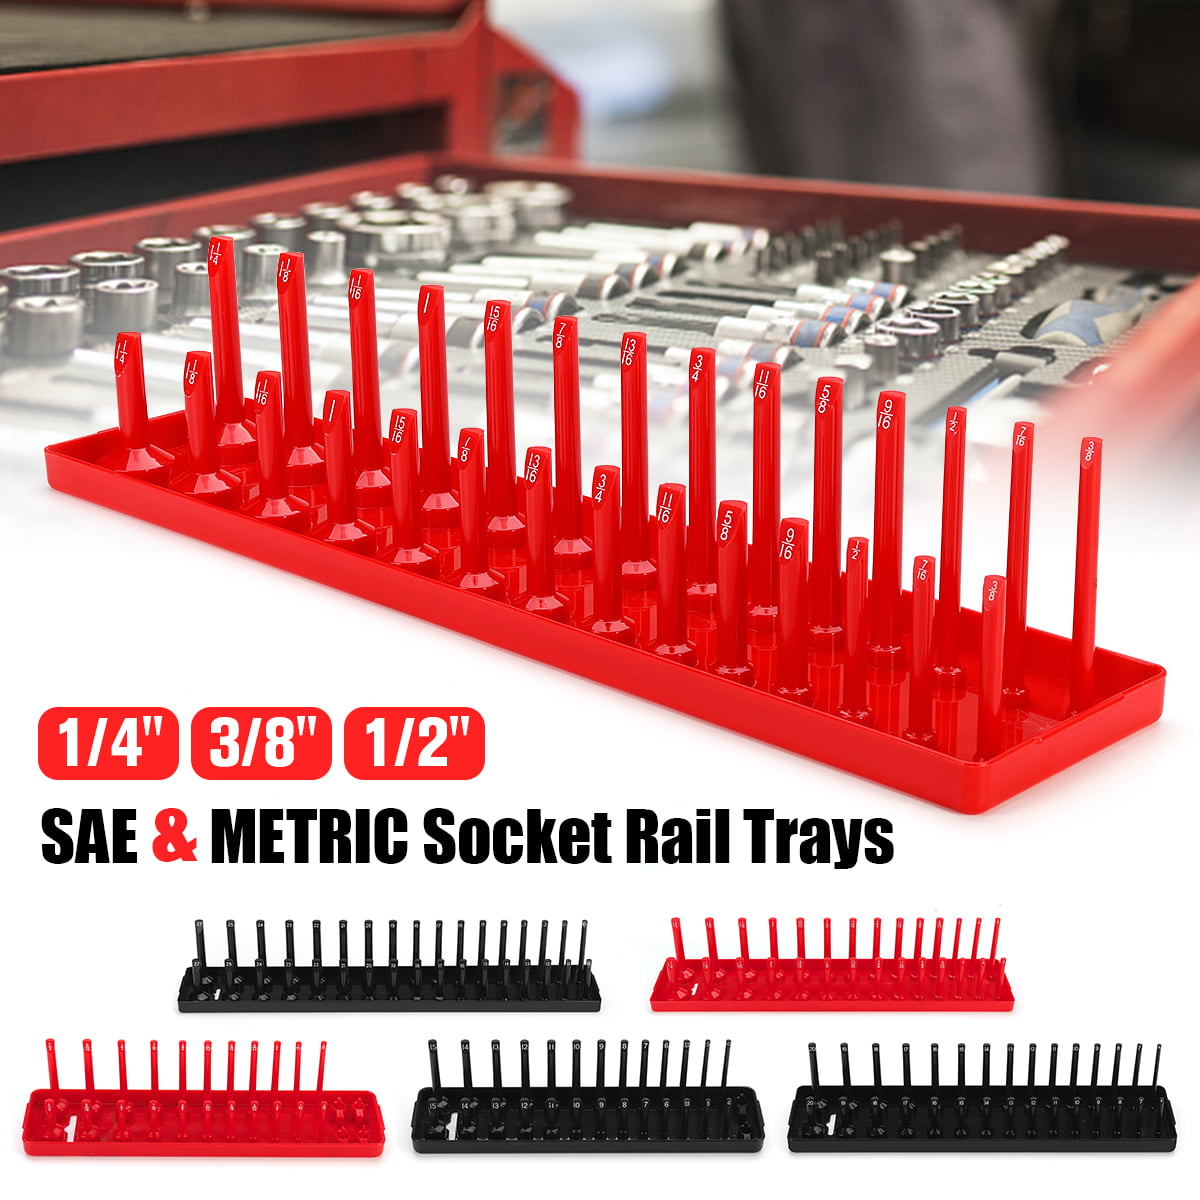 2Pack 1/2" Metric and SAE Socket Tray Rack Holder Storage Organizer NEW 